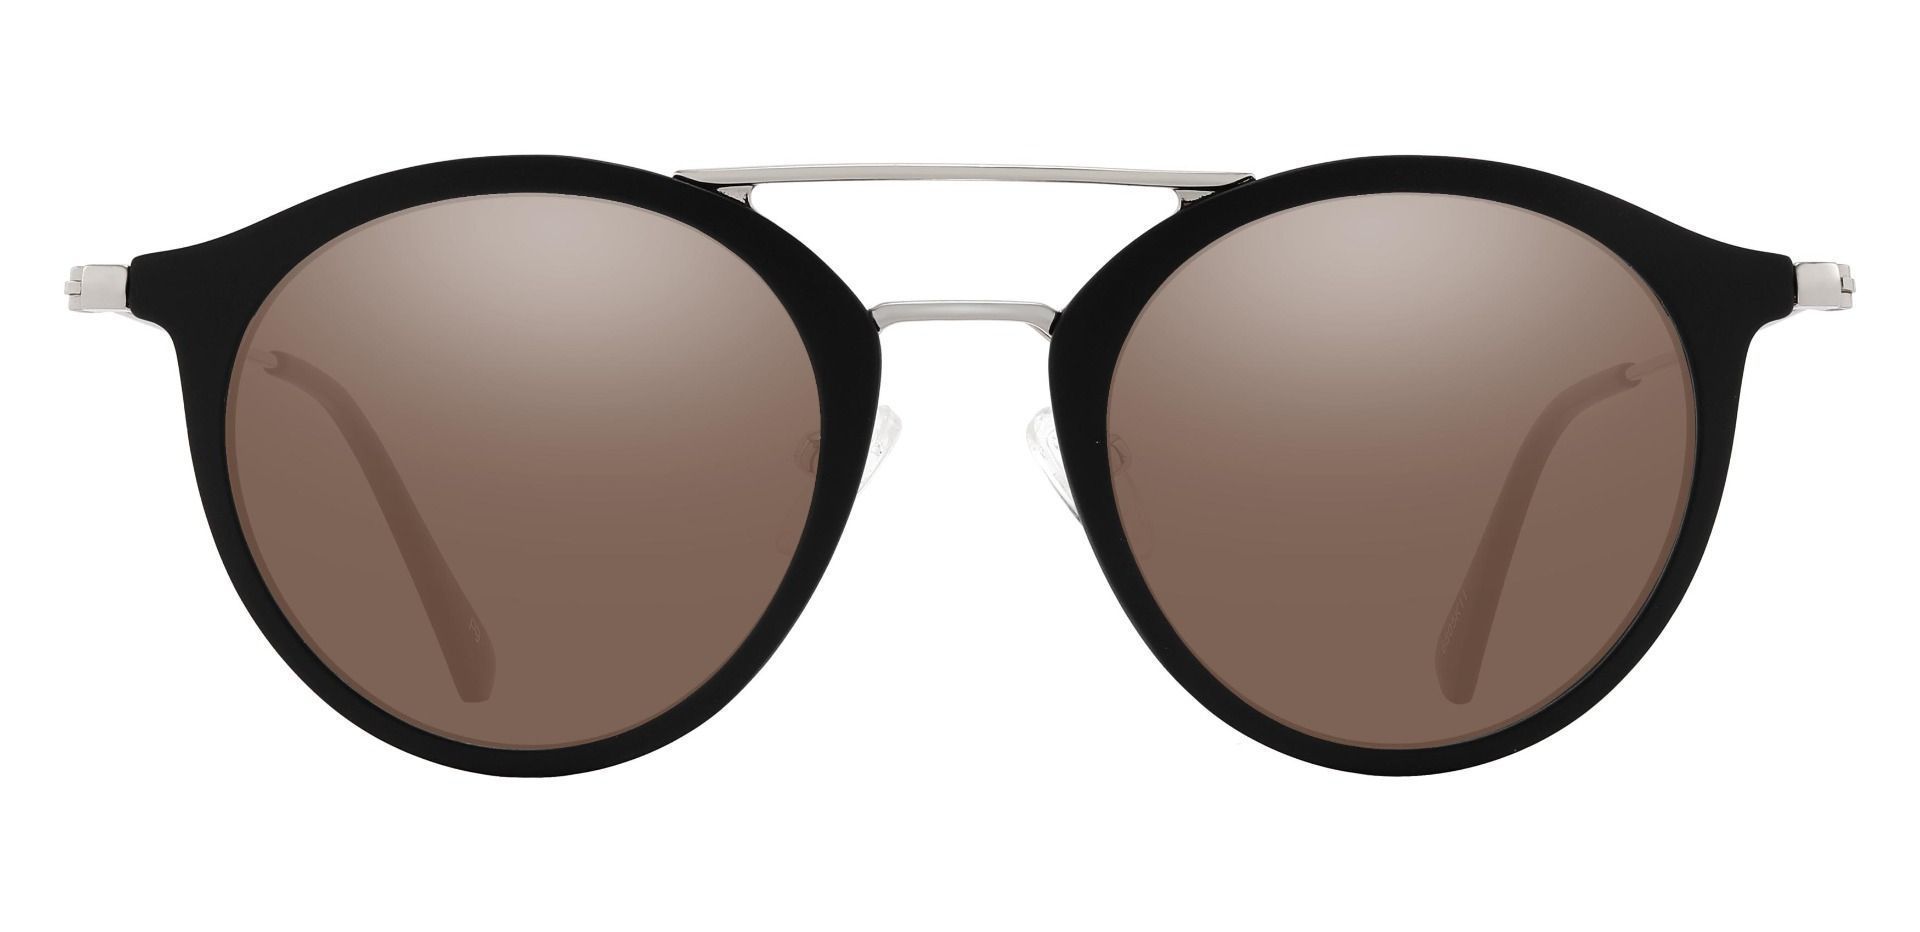 Malden Aviator Prescription Sunglasses - Black Frame With Brown Lenses